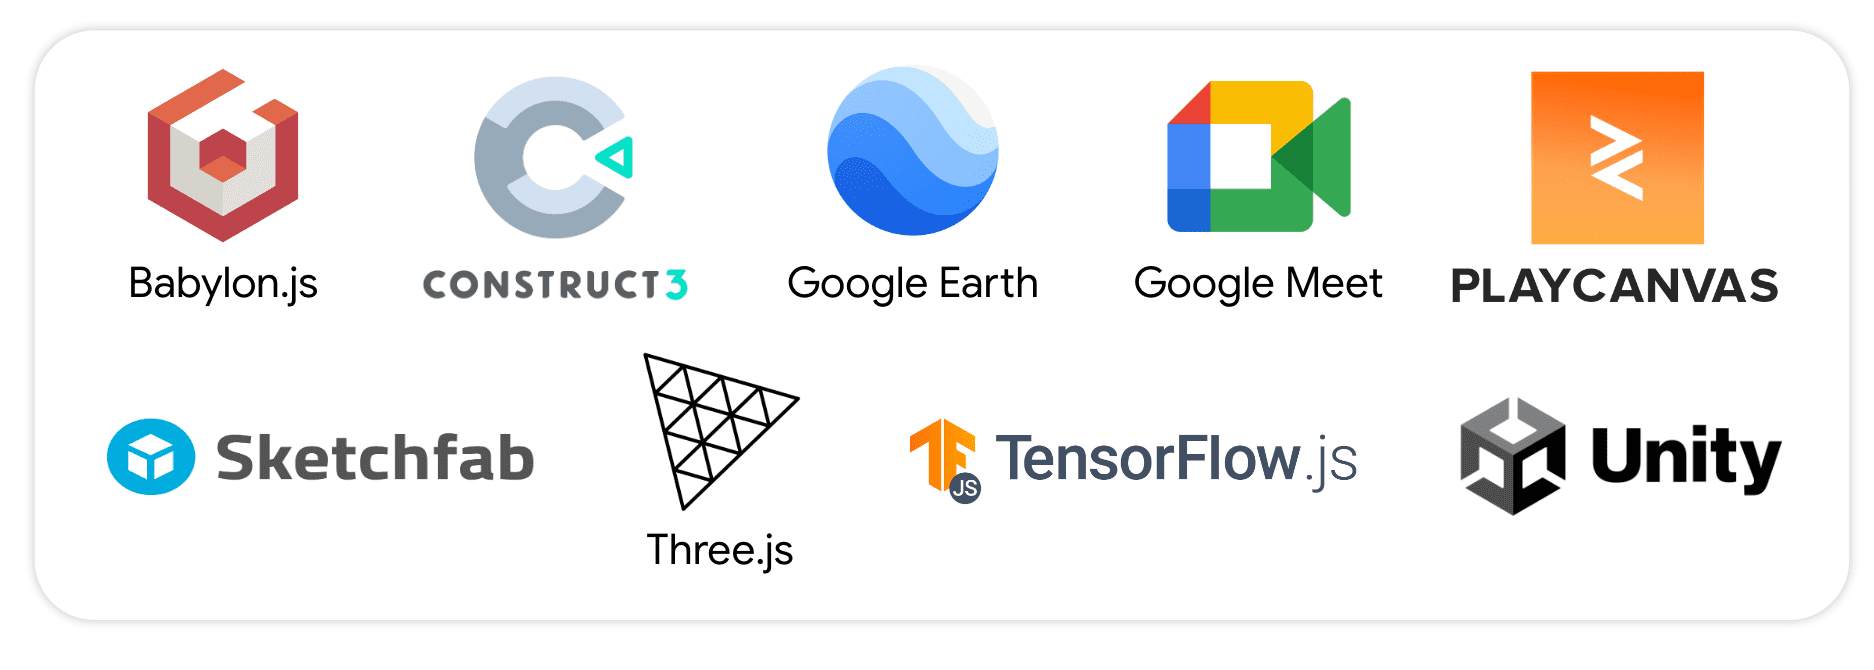 Babylon.js, Konstrukt 3, Google Earth, Google Meet, PlayCanvas, Sketchfab, Three.JS, TensorFlow.js und Unity.